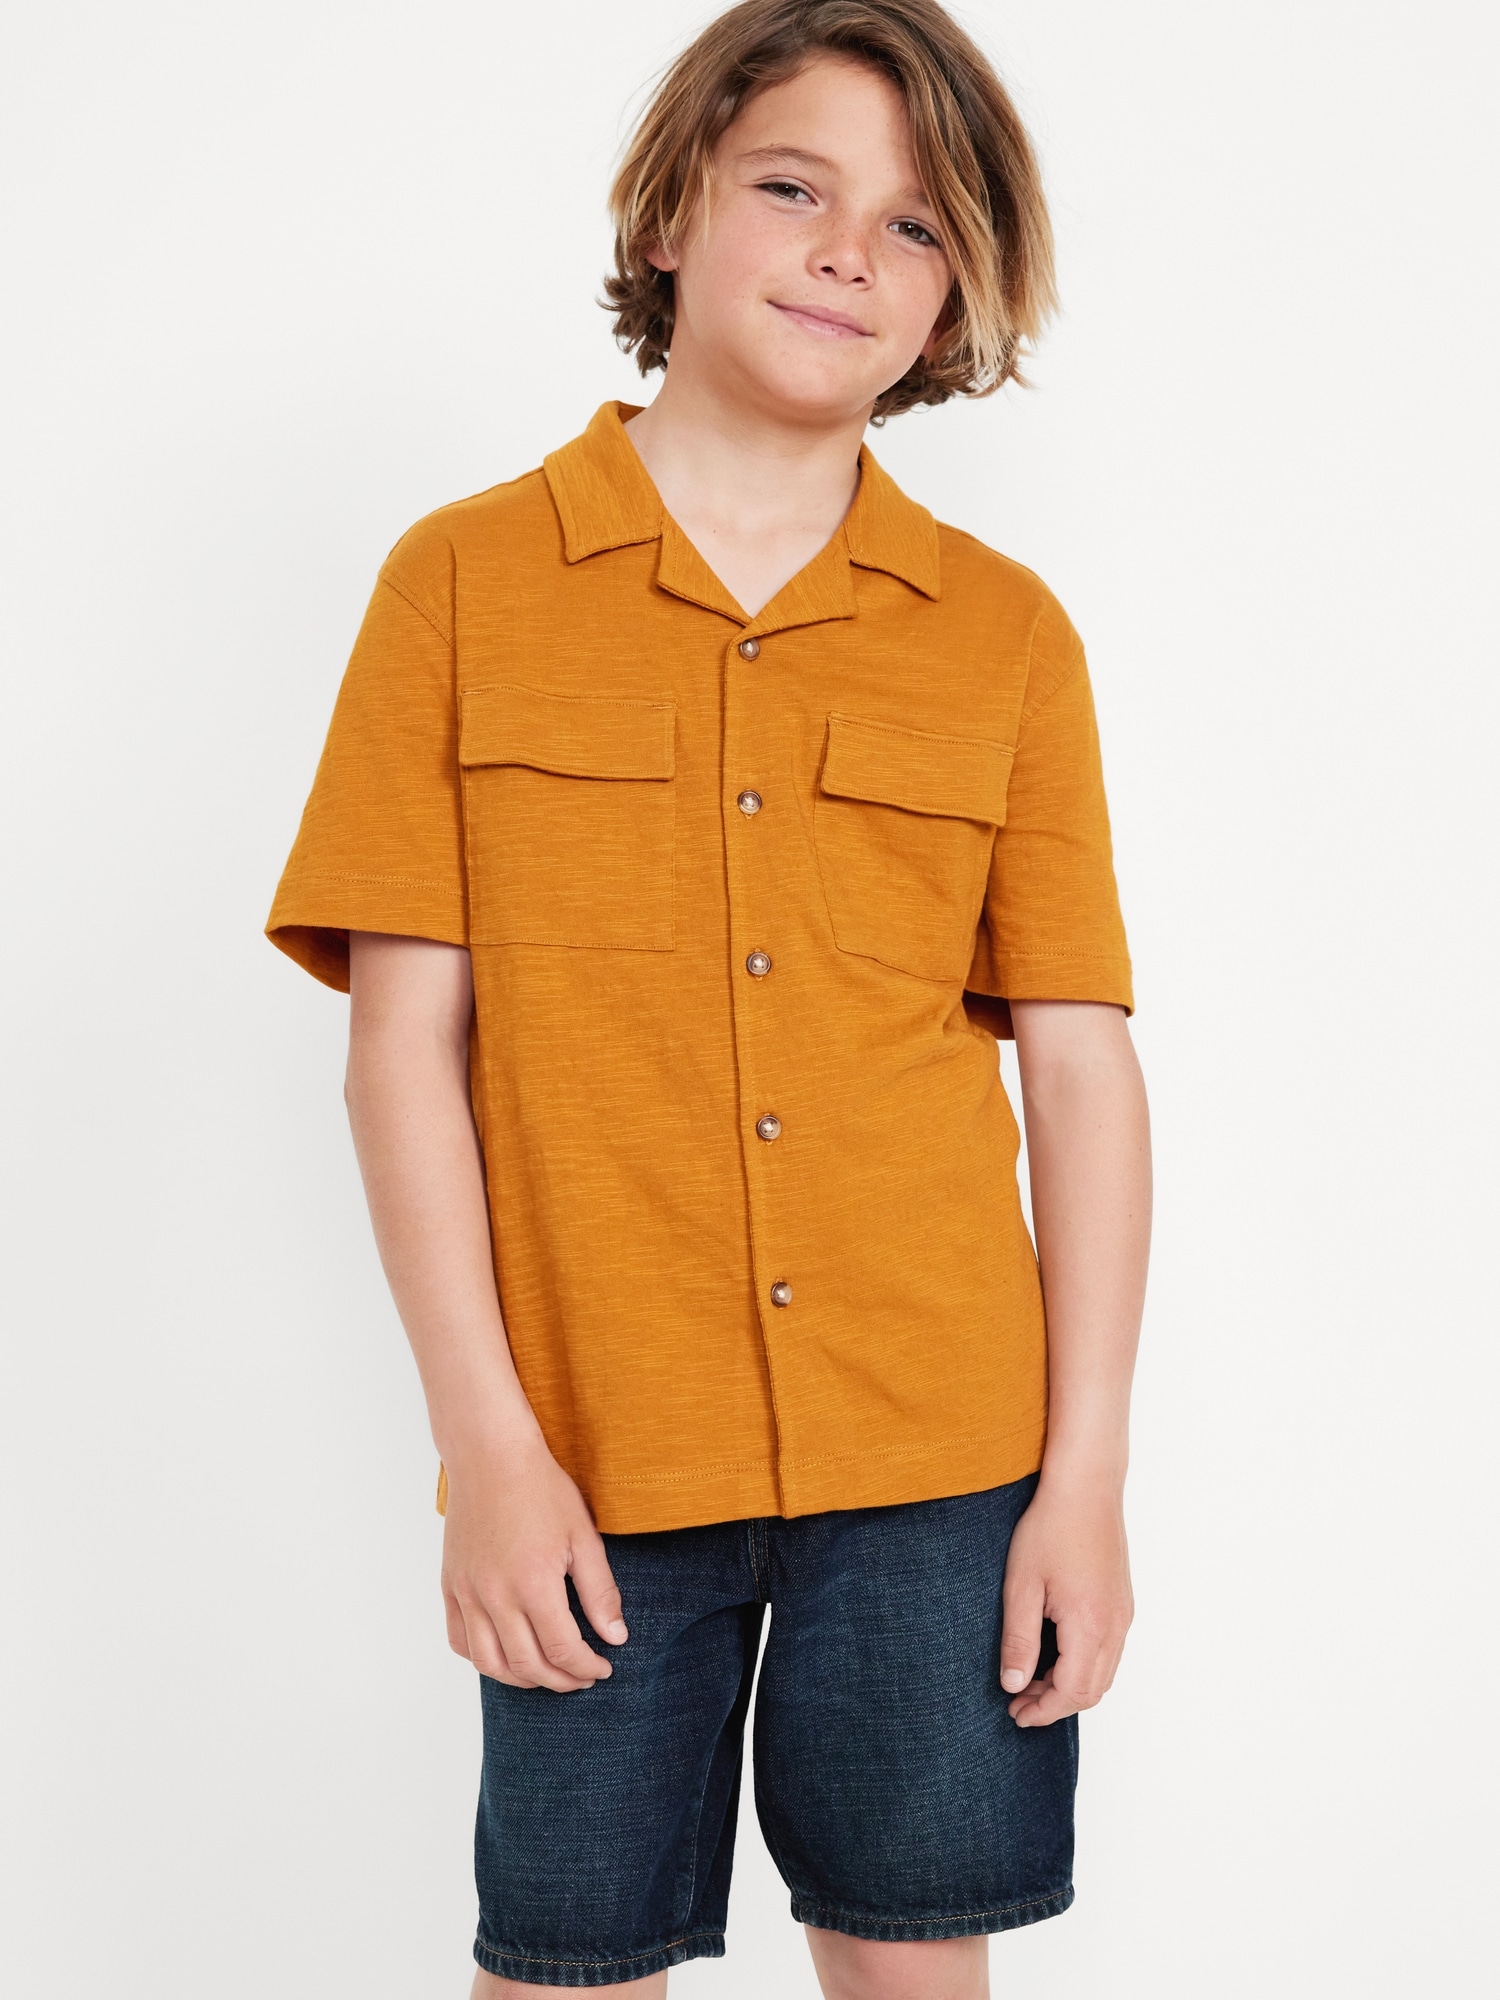 Short-Sleeve Soft-Knit Utility Pocket Shirt for Boys